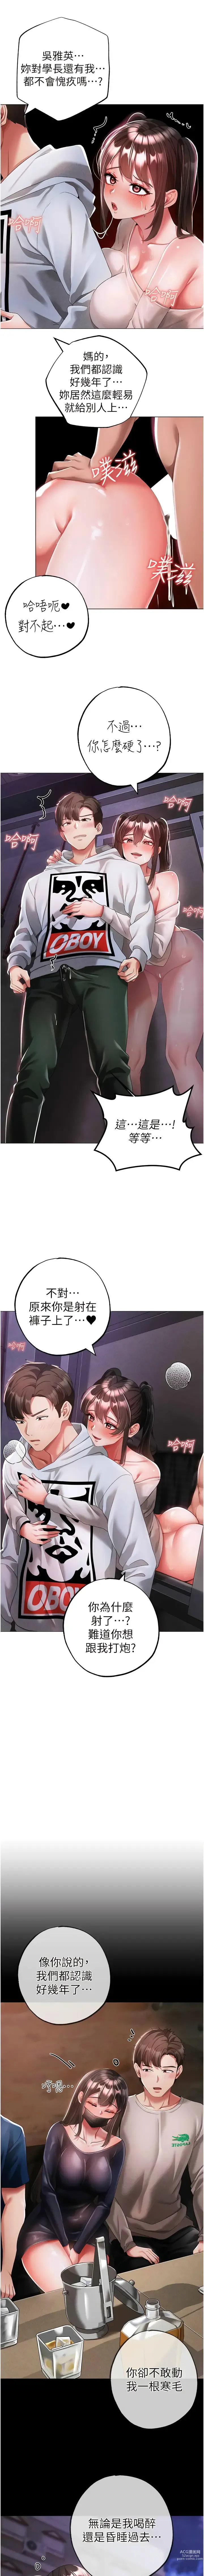 Page 682 of manga ↖㊣煞氣a猛男㊣↘ 1-37